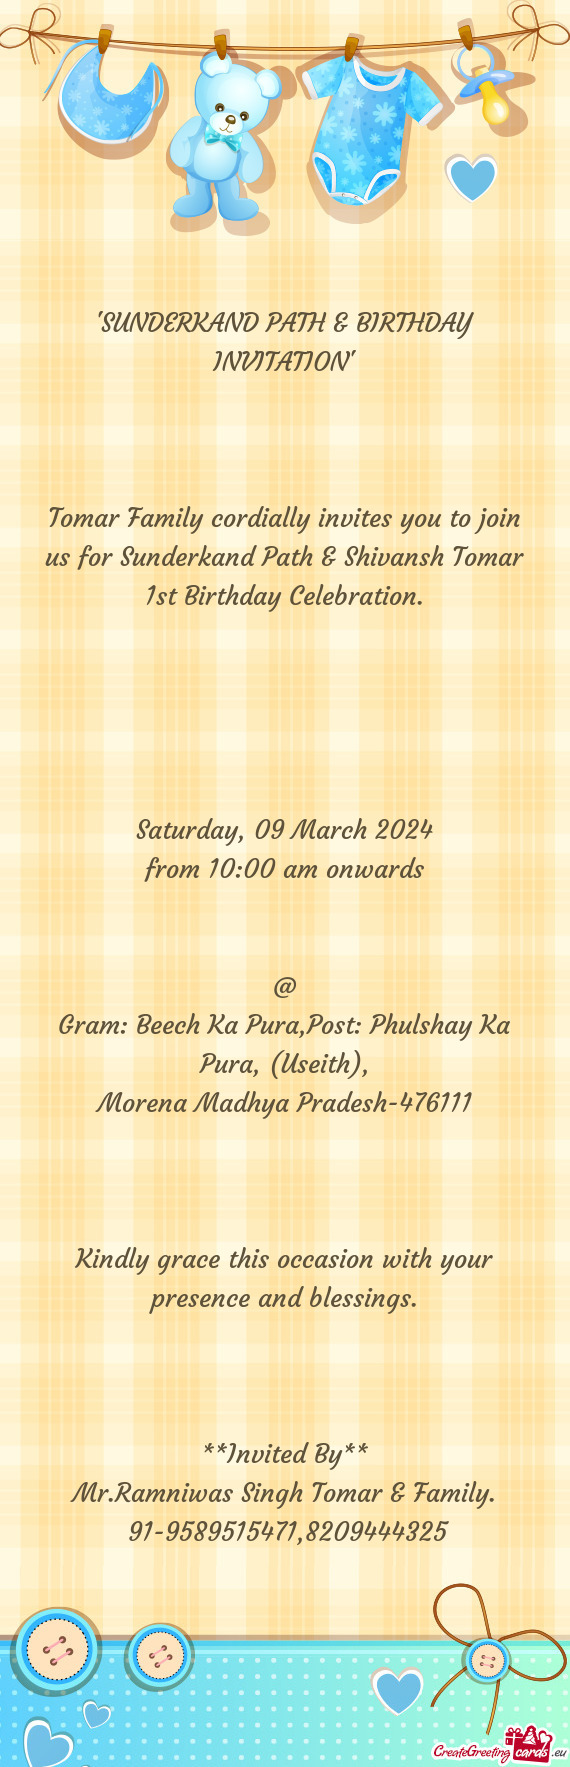 Tomar Family cordially invites you to join us for Sunderkand Path & Shivansh Tomar 1st Birthday Cele